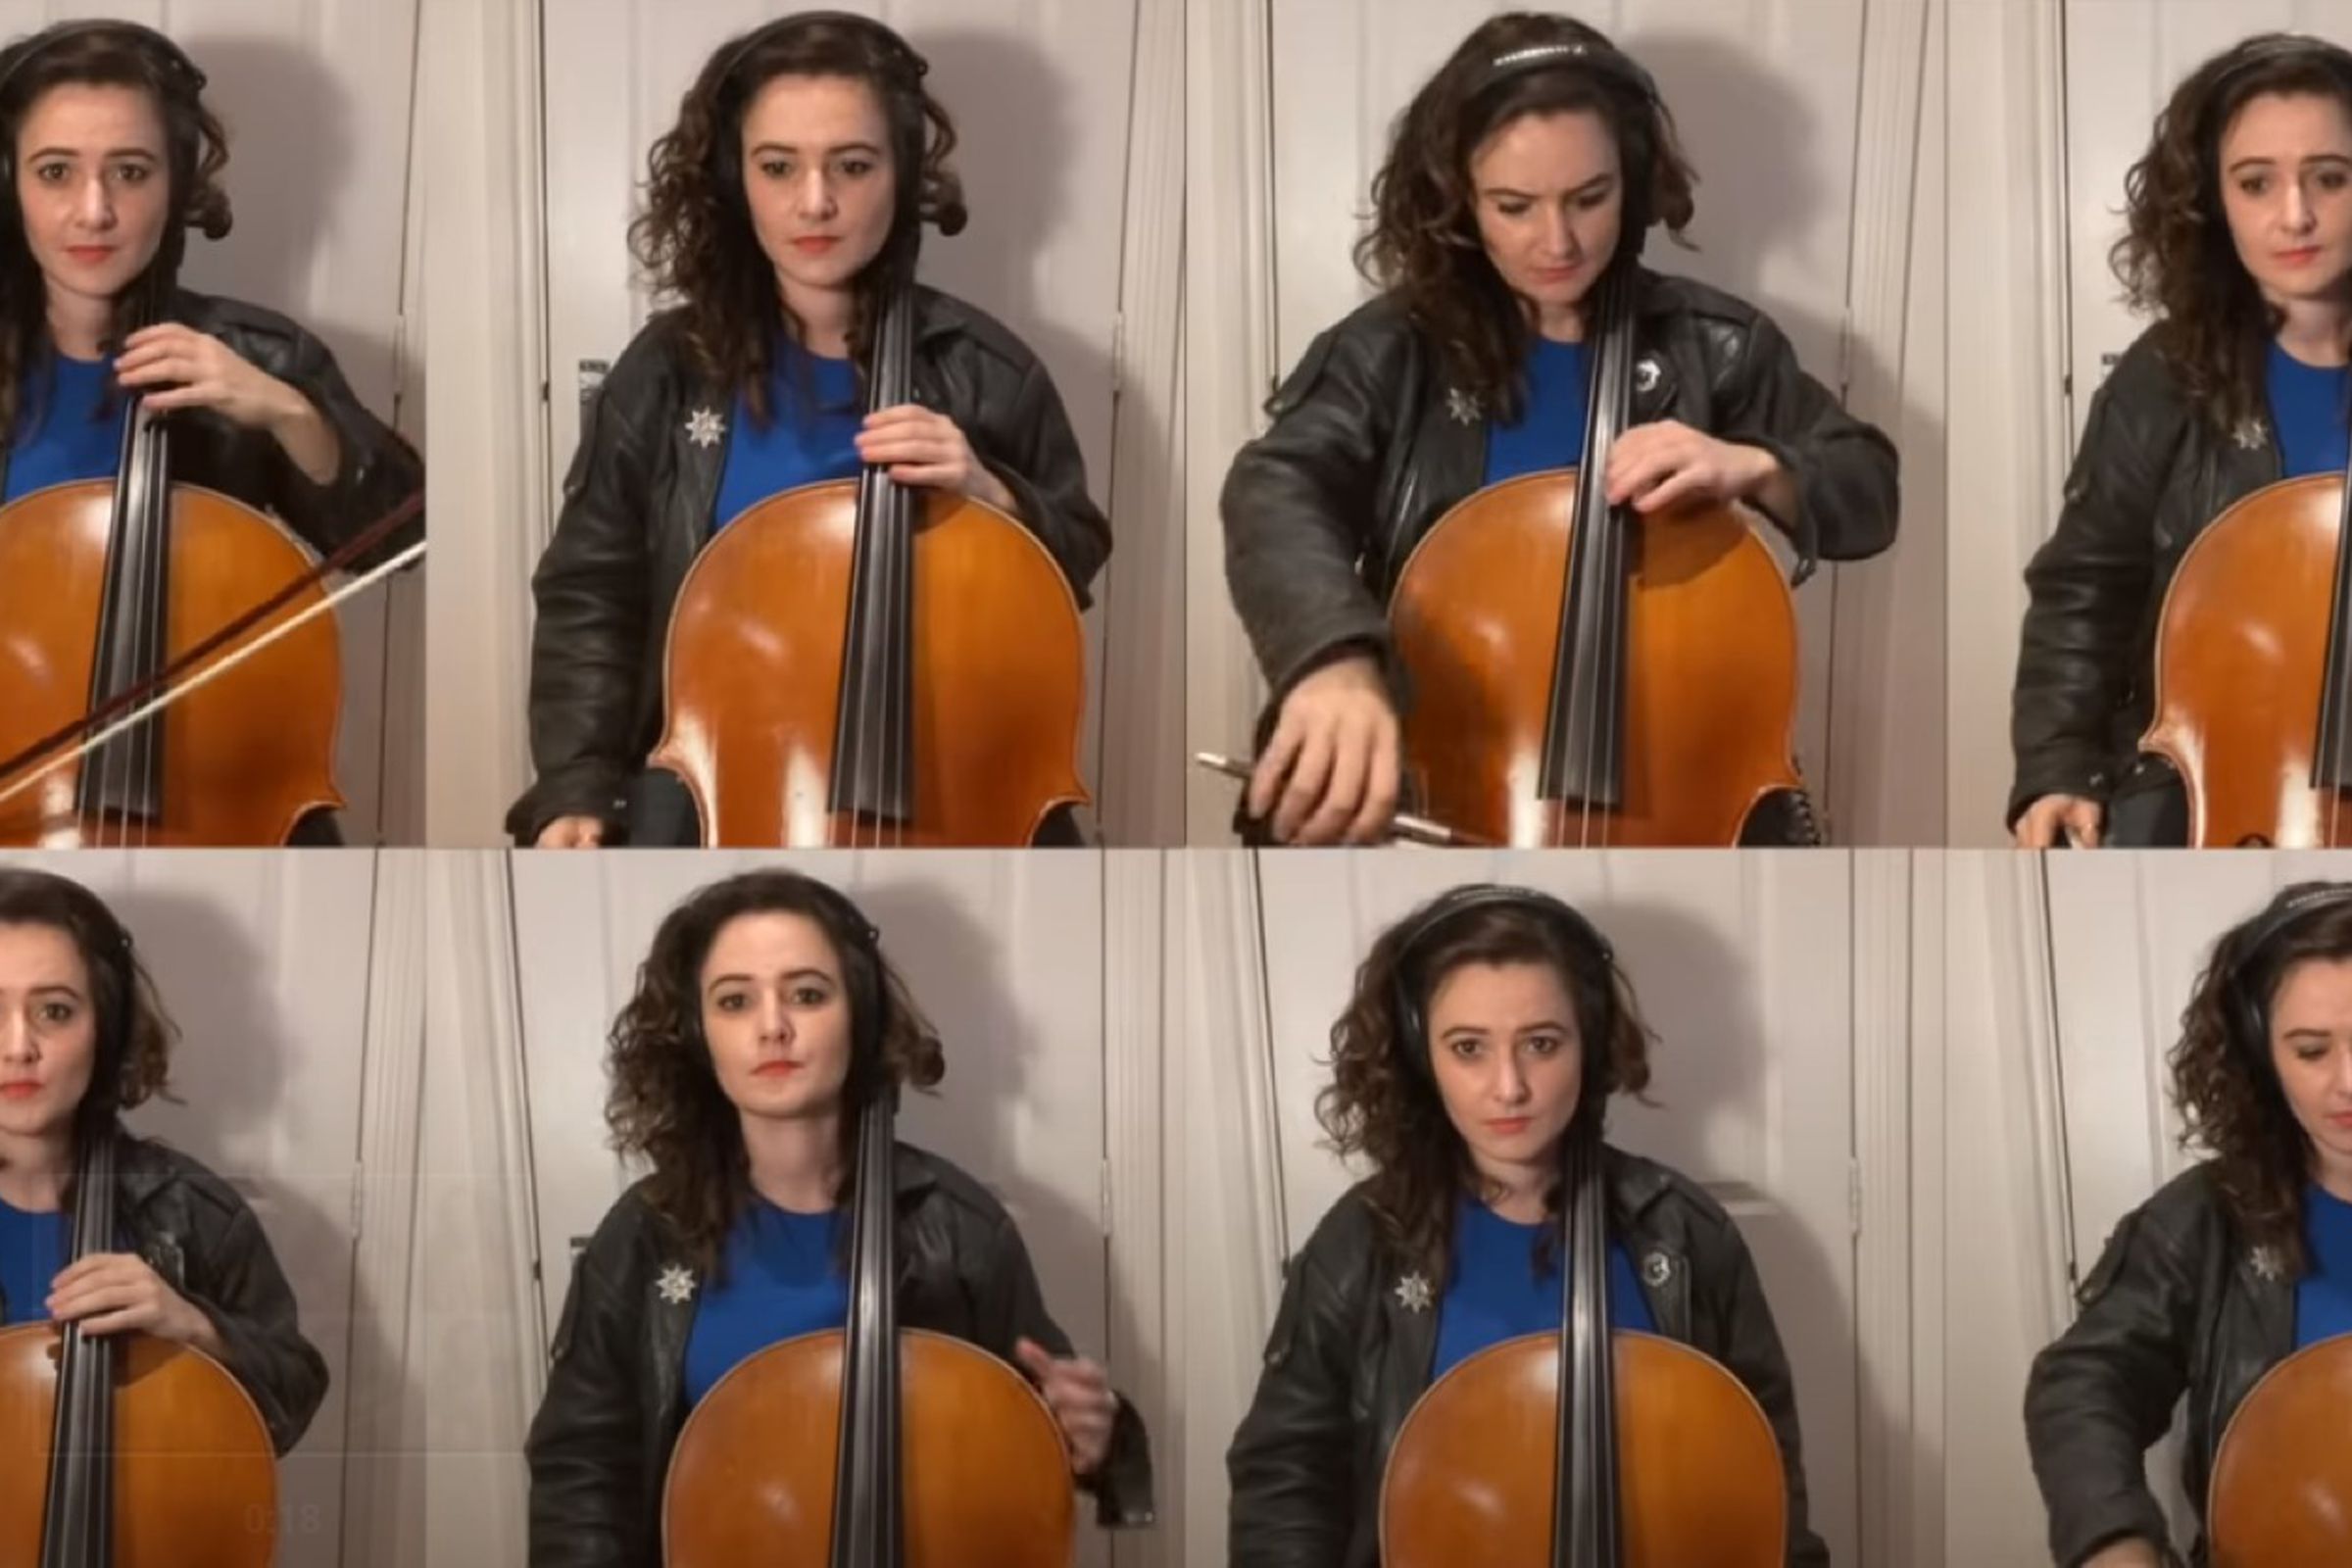 Samara Ginsberg rocks the Knight Rider theme song on the cello